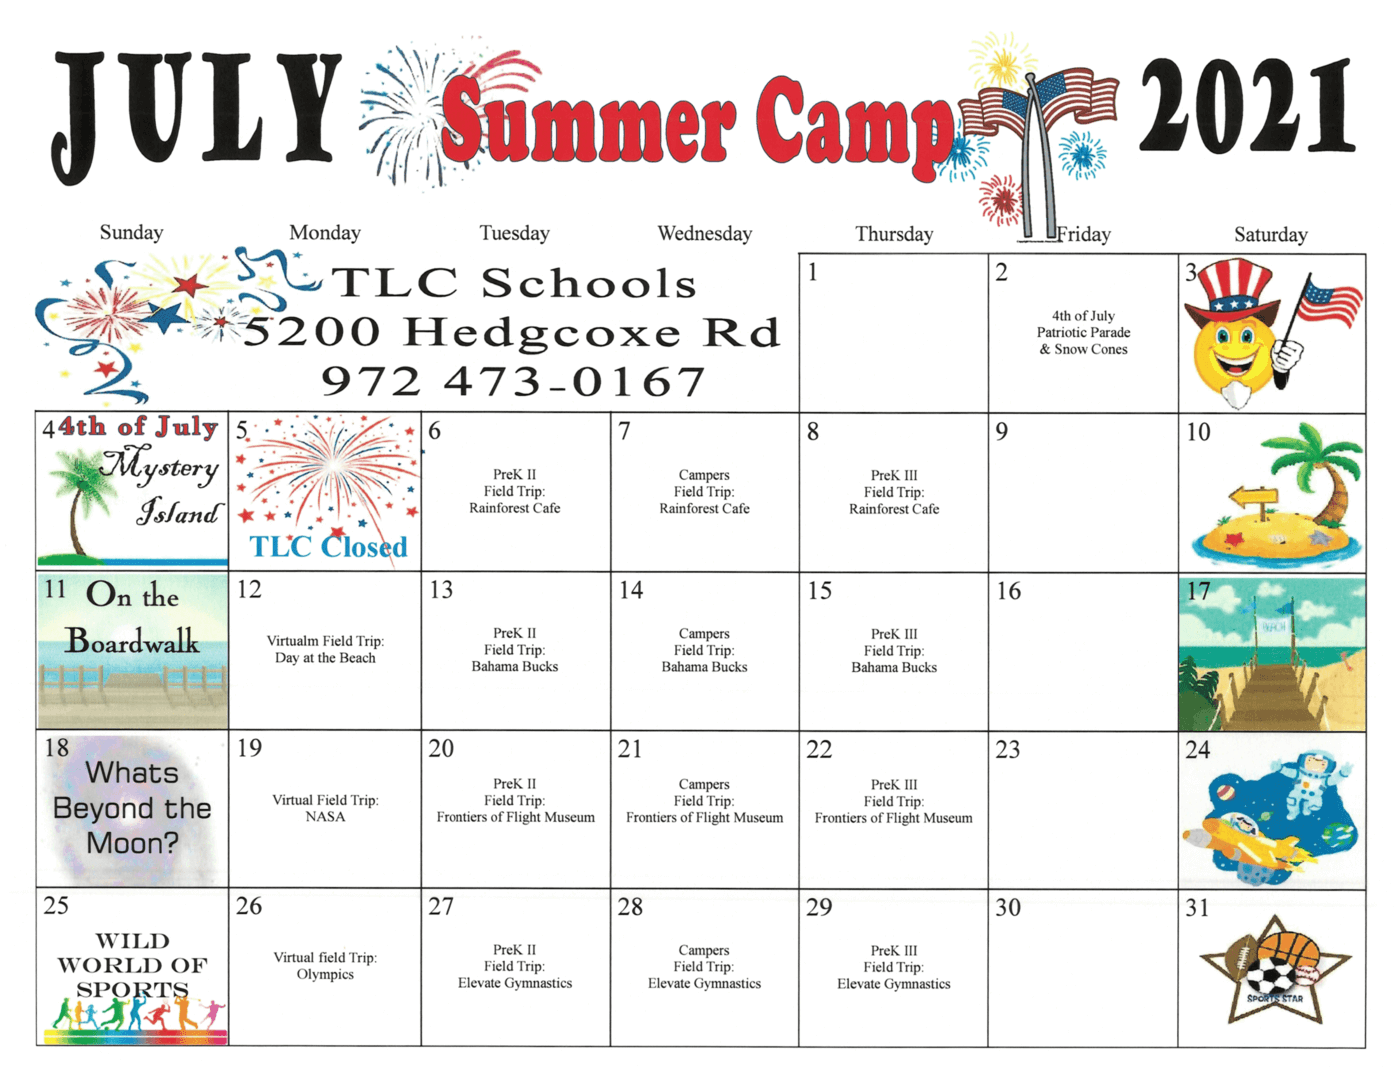 Monthly Activity Calendar TLC Schools Plano Texas